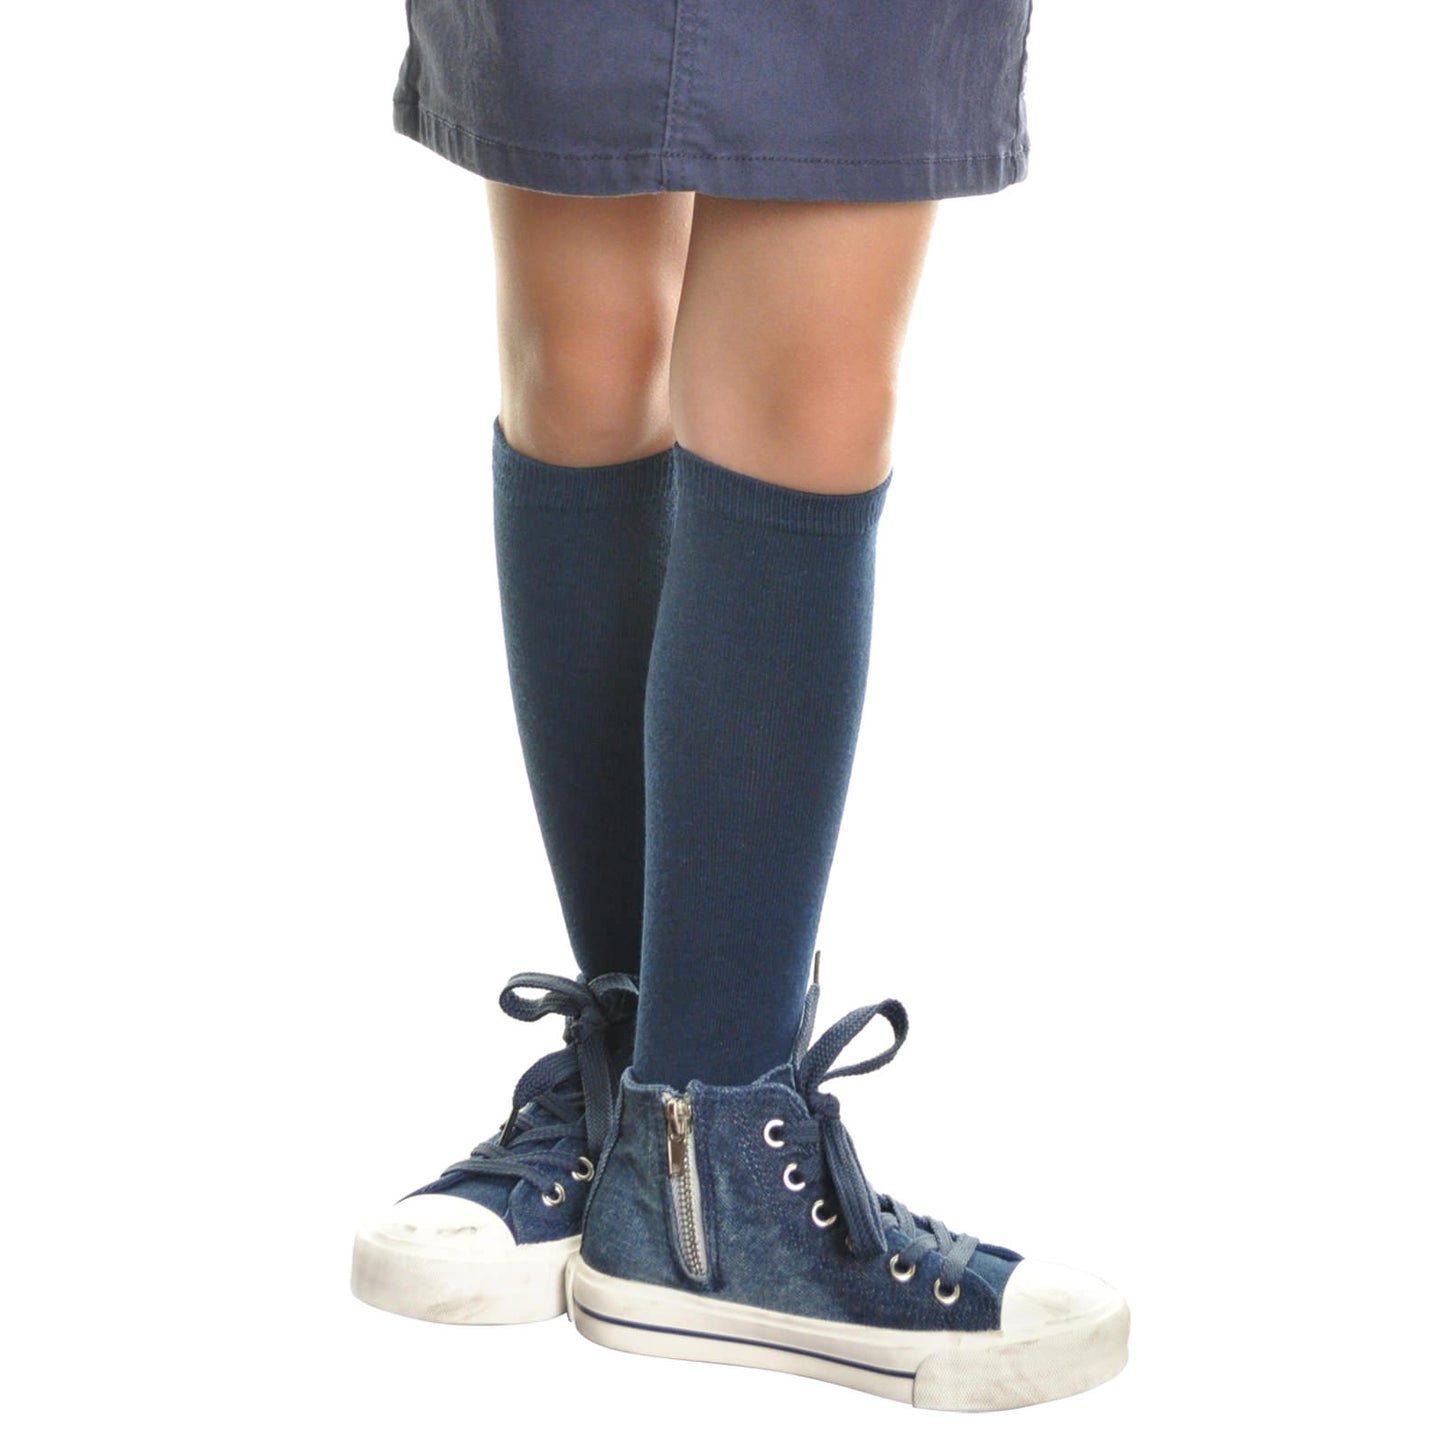 Angelina Classic Uniform Knee-High School Socks (12-Pairs), #3102